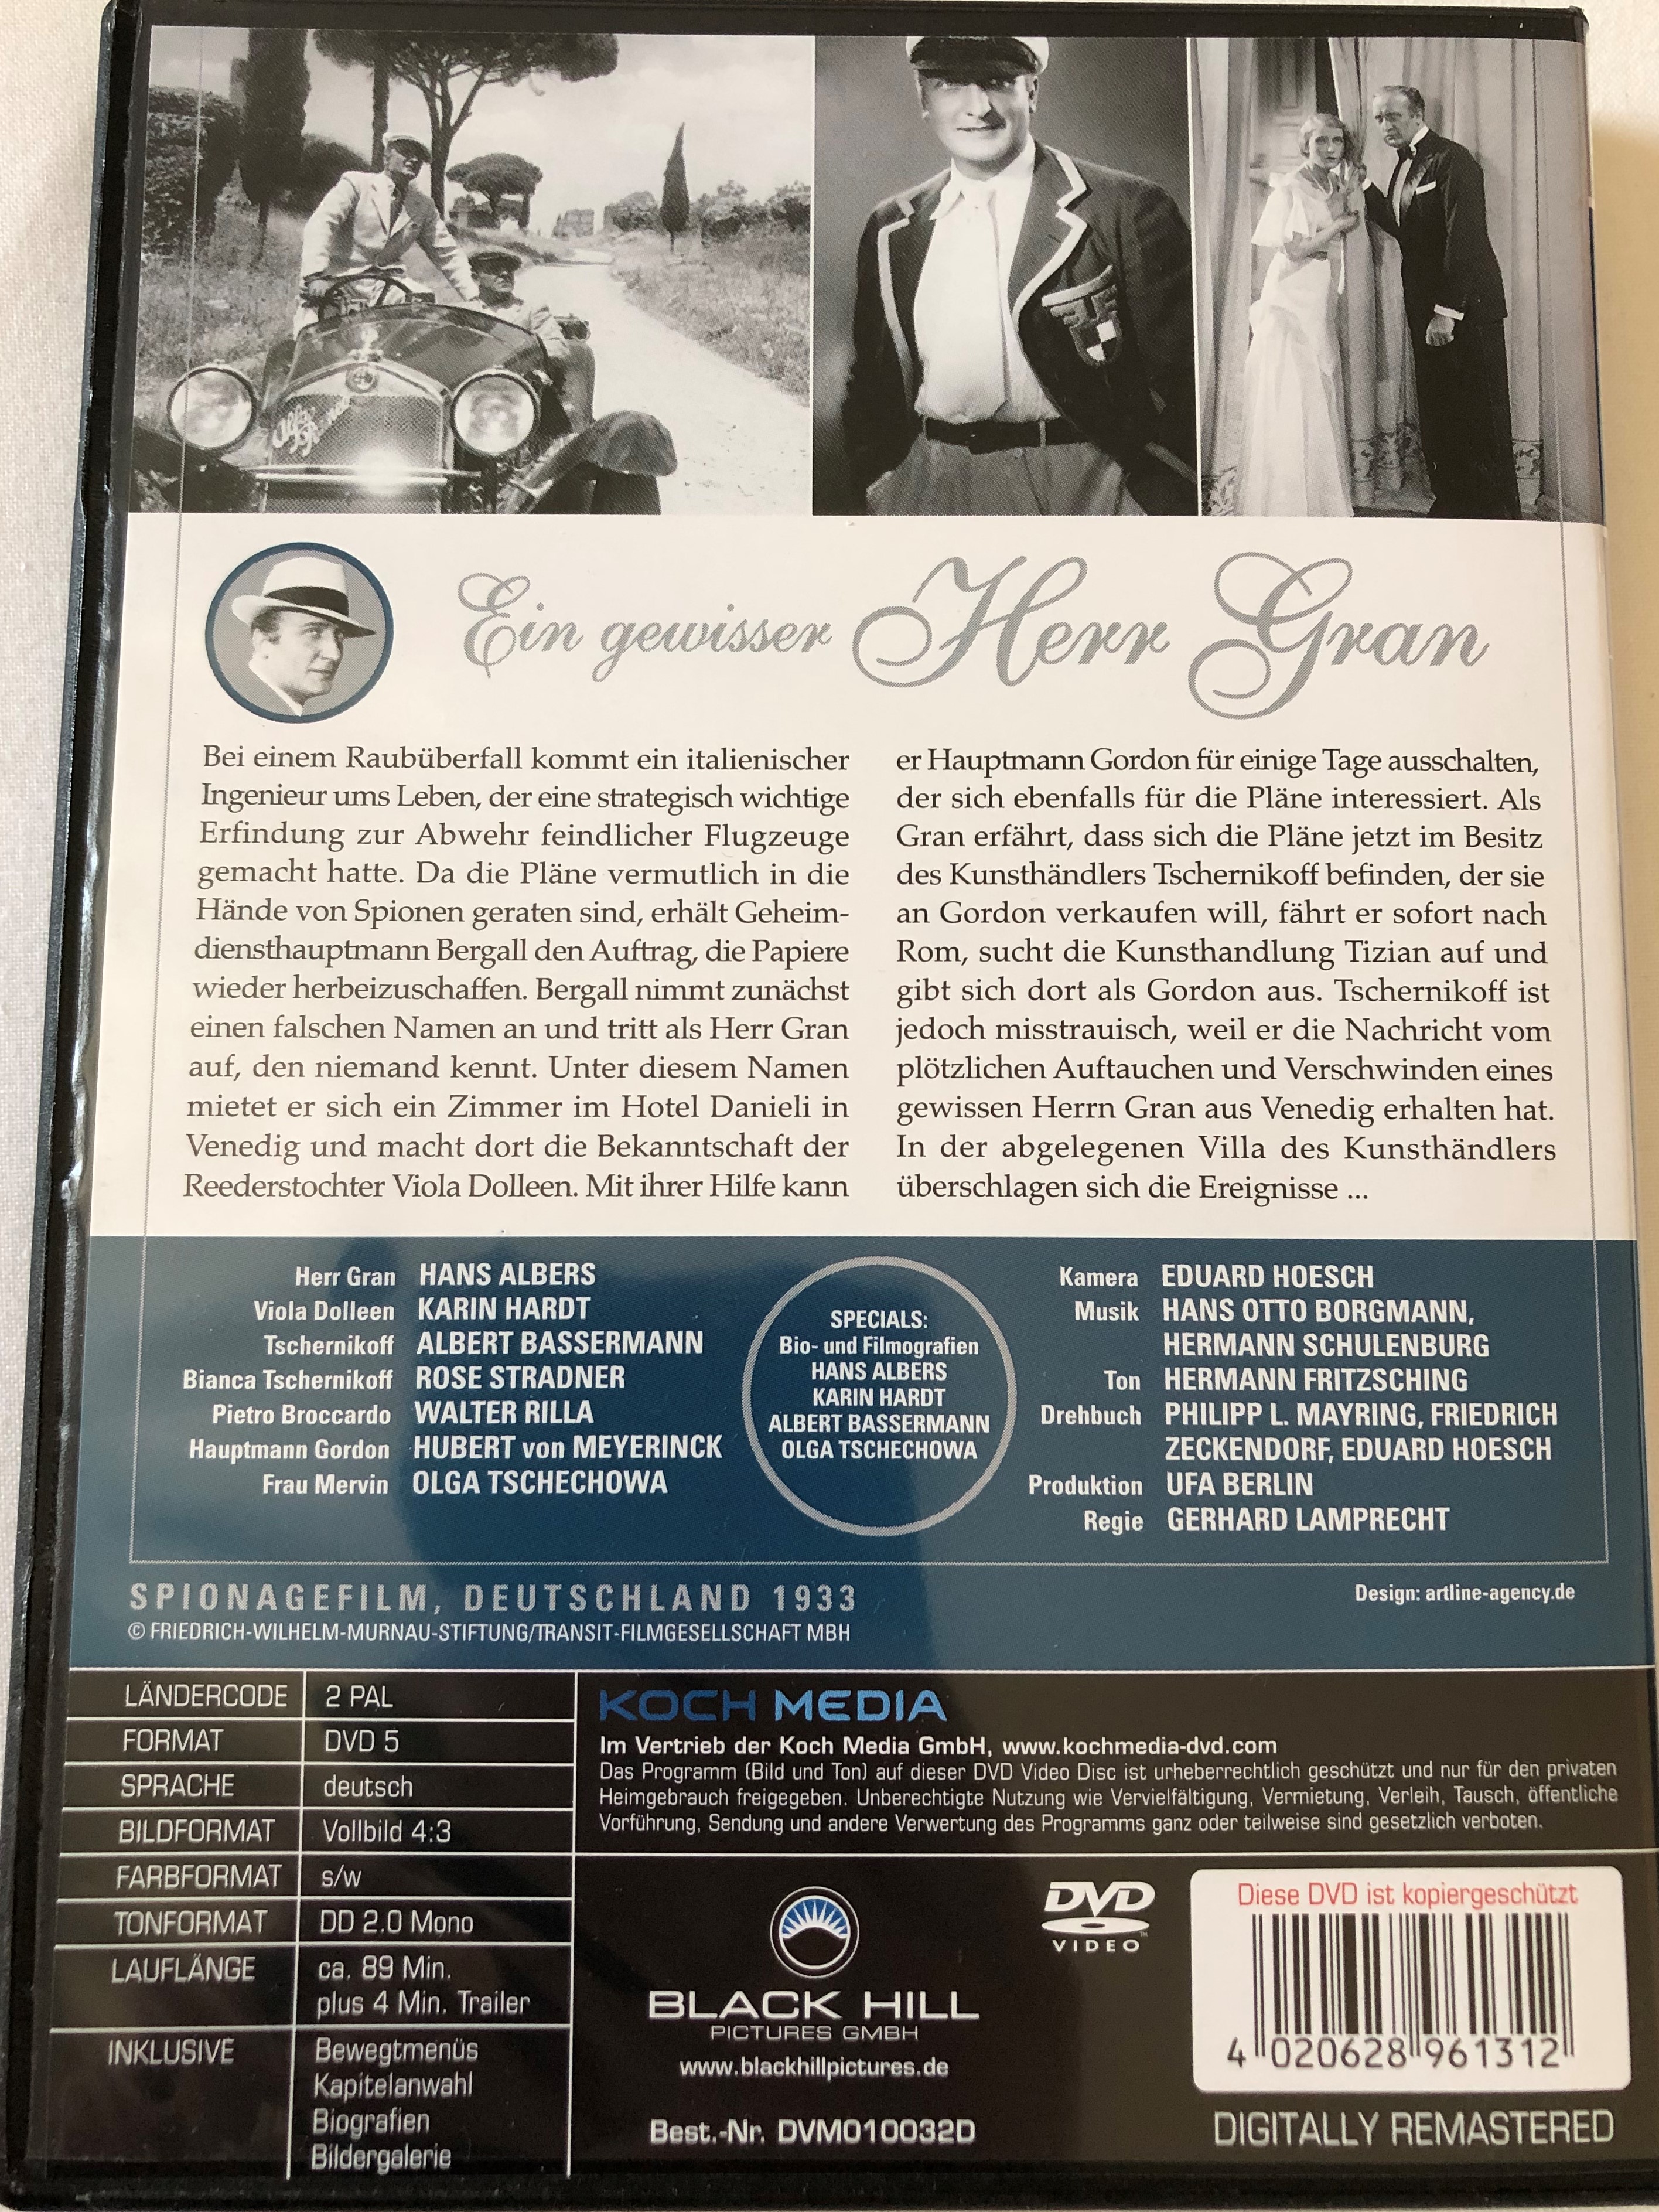 ein-gewisser-herr-gran-dvd-1933-a-certain-mr.-gran-directed-by-gerhard-lamprecht-starring-hans-albers-karin-hardt-albert-bassermann-digitally-remastered-deutscher-filmklassiker-2-.jpg